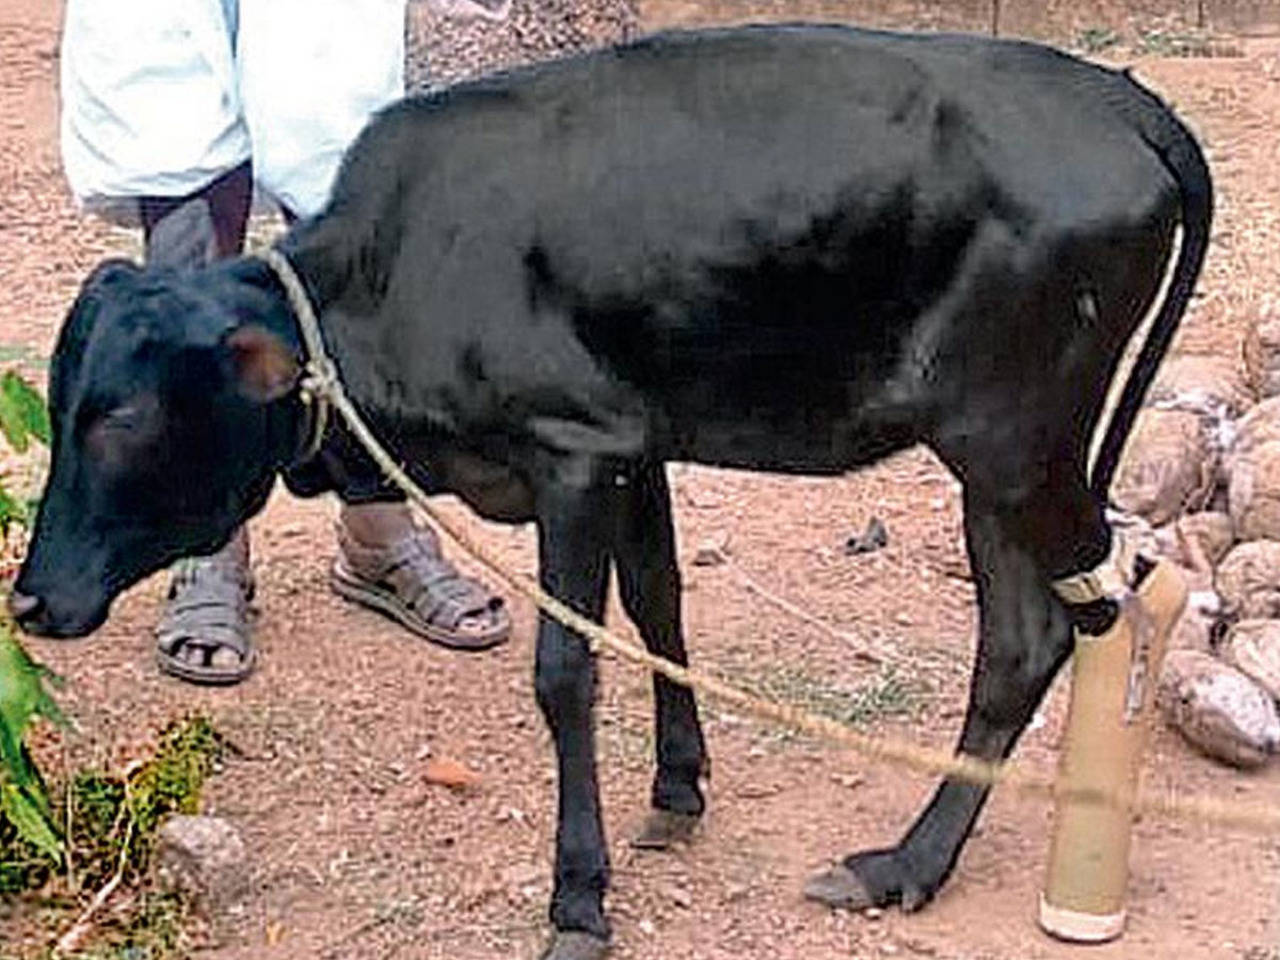 Cow legs